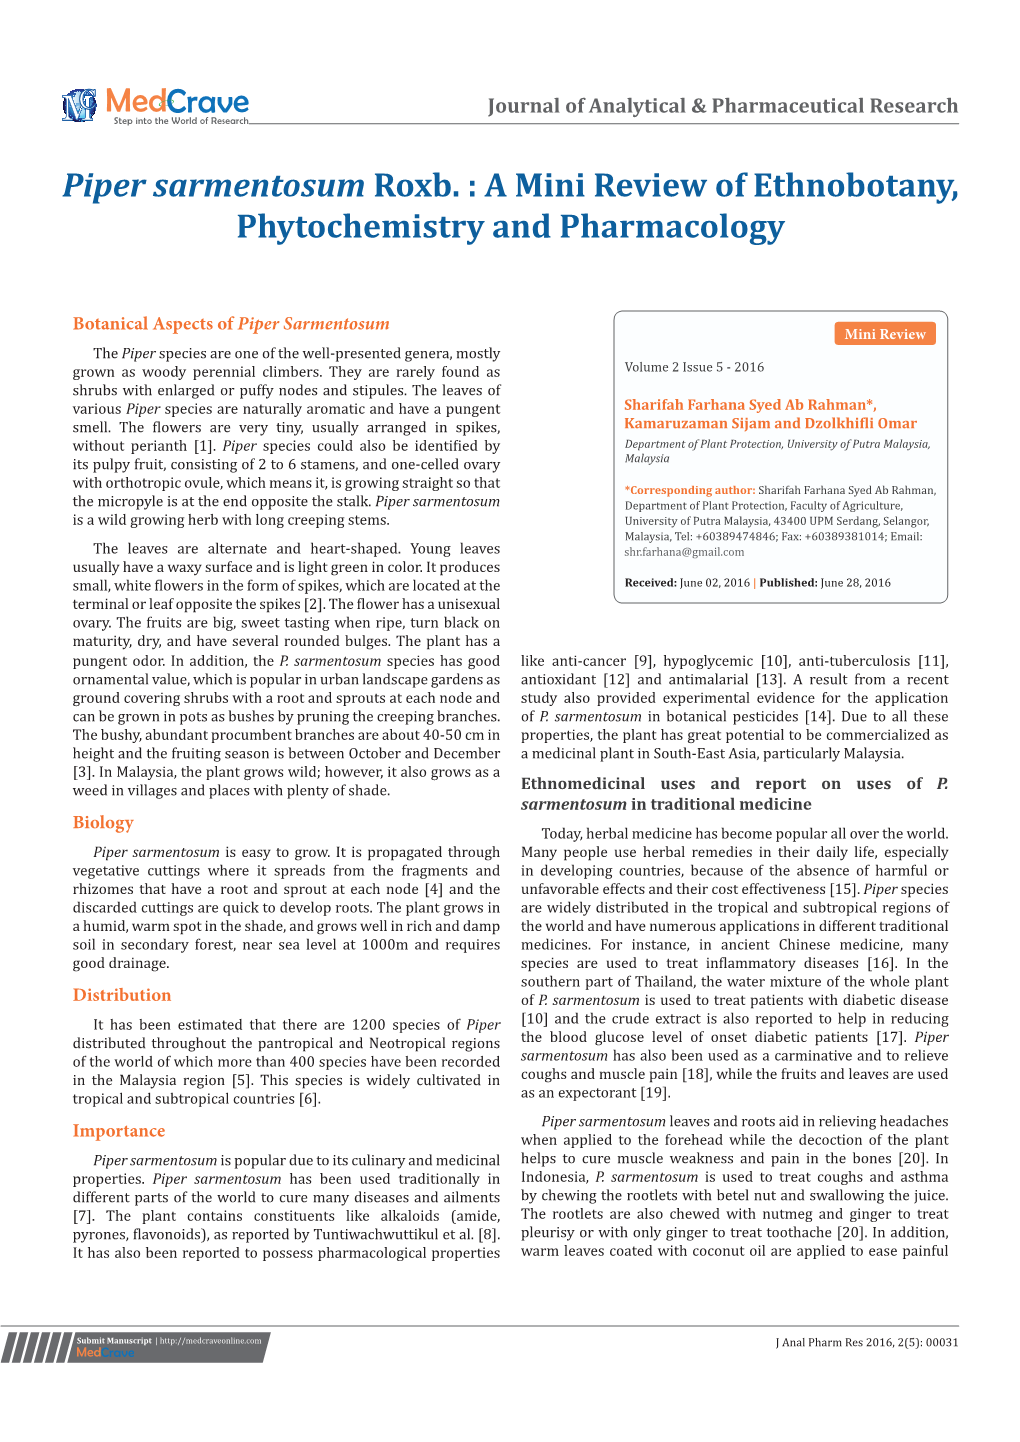 Piper Sarmentosum Roxb. : a Mini Review of Ethnobotany, Phytochemistry and Pharmacology